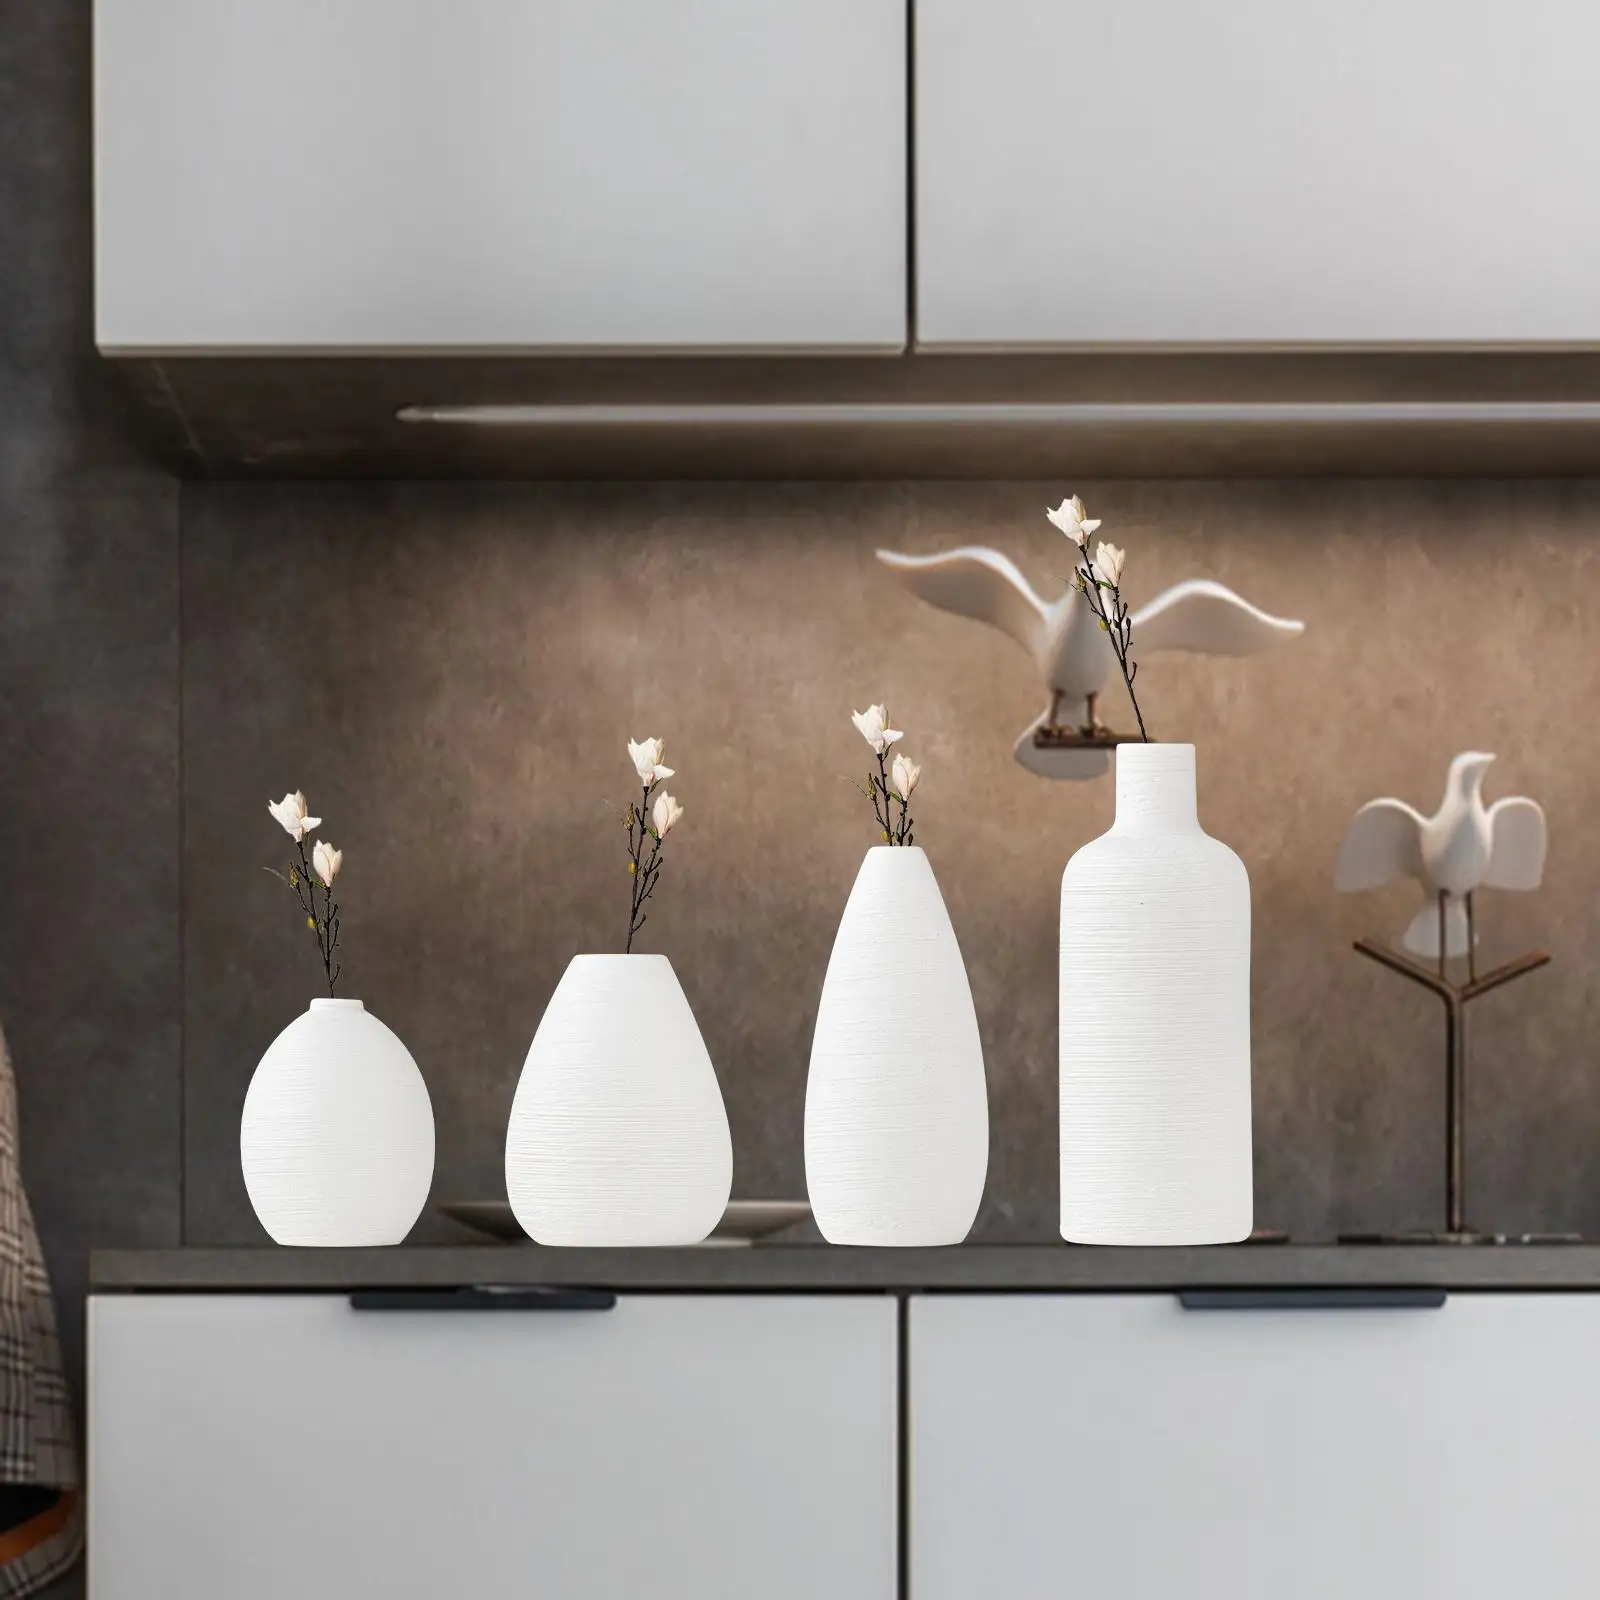 4x Minimalist Flower Vases Decorative Geometric Centerpieces Ceramic Elegant Vases for Kitchen Desk Table Living Room Shelf